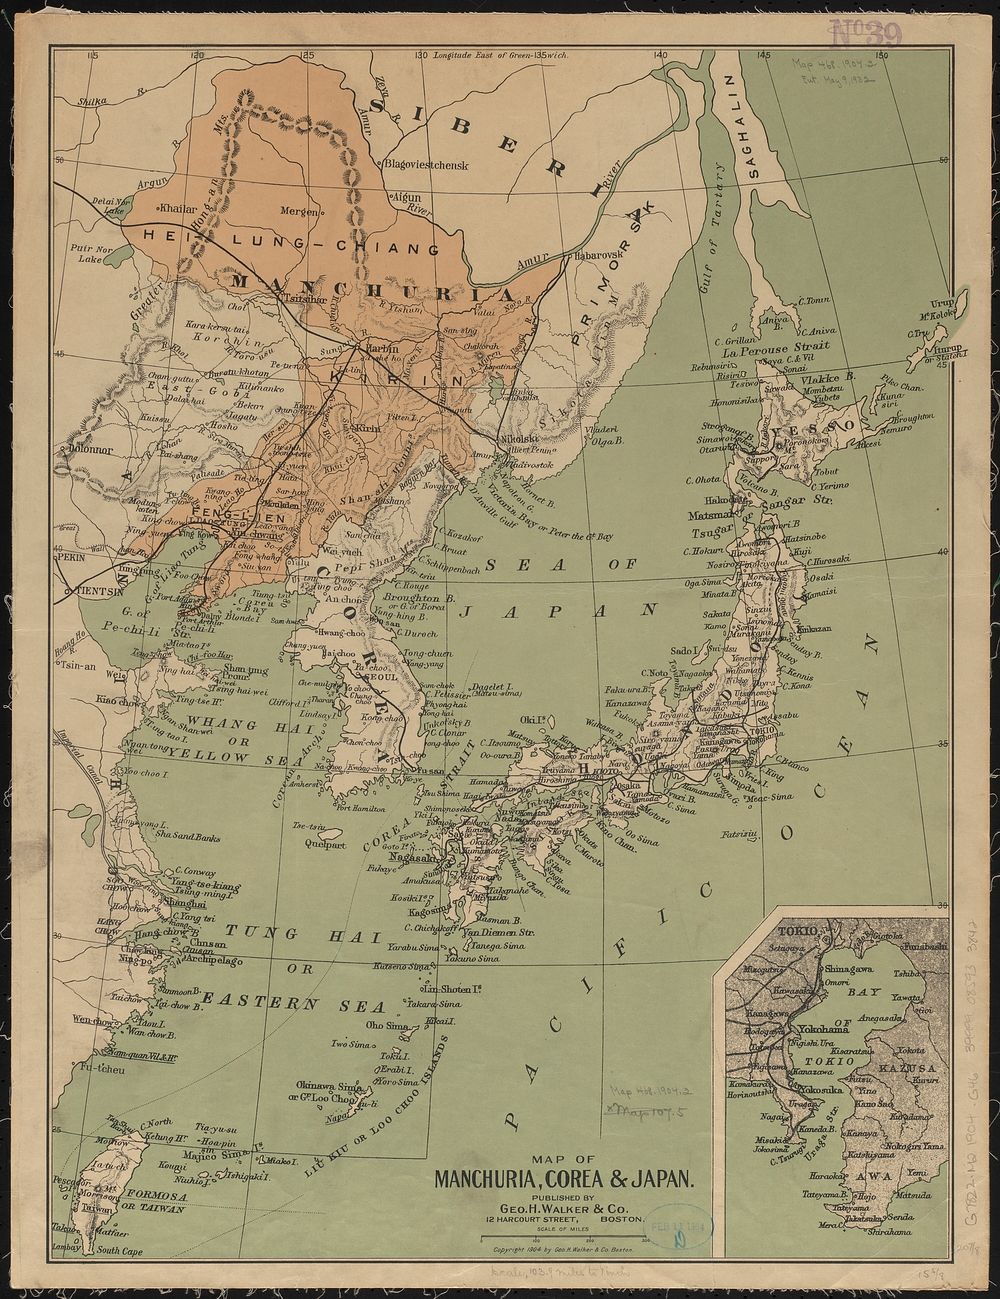             Map of Manchuria, Corea & Japan          